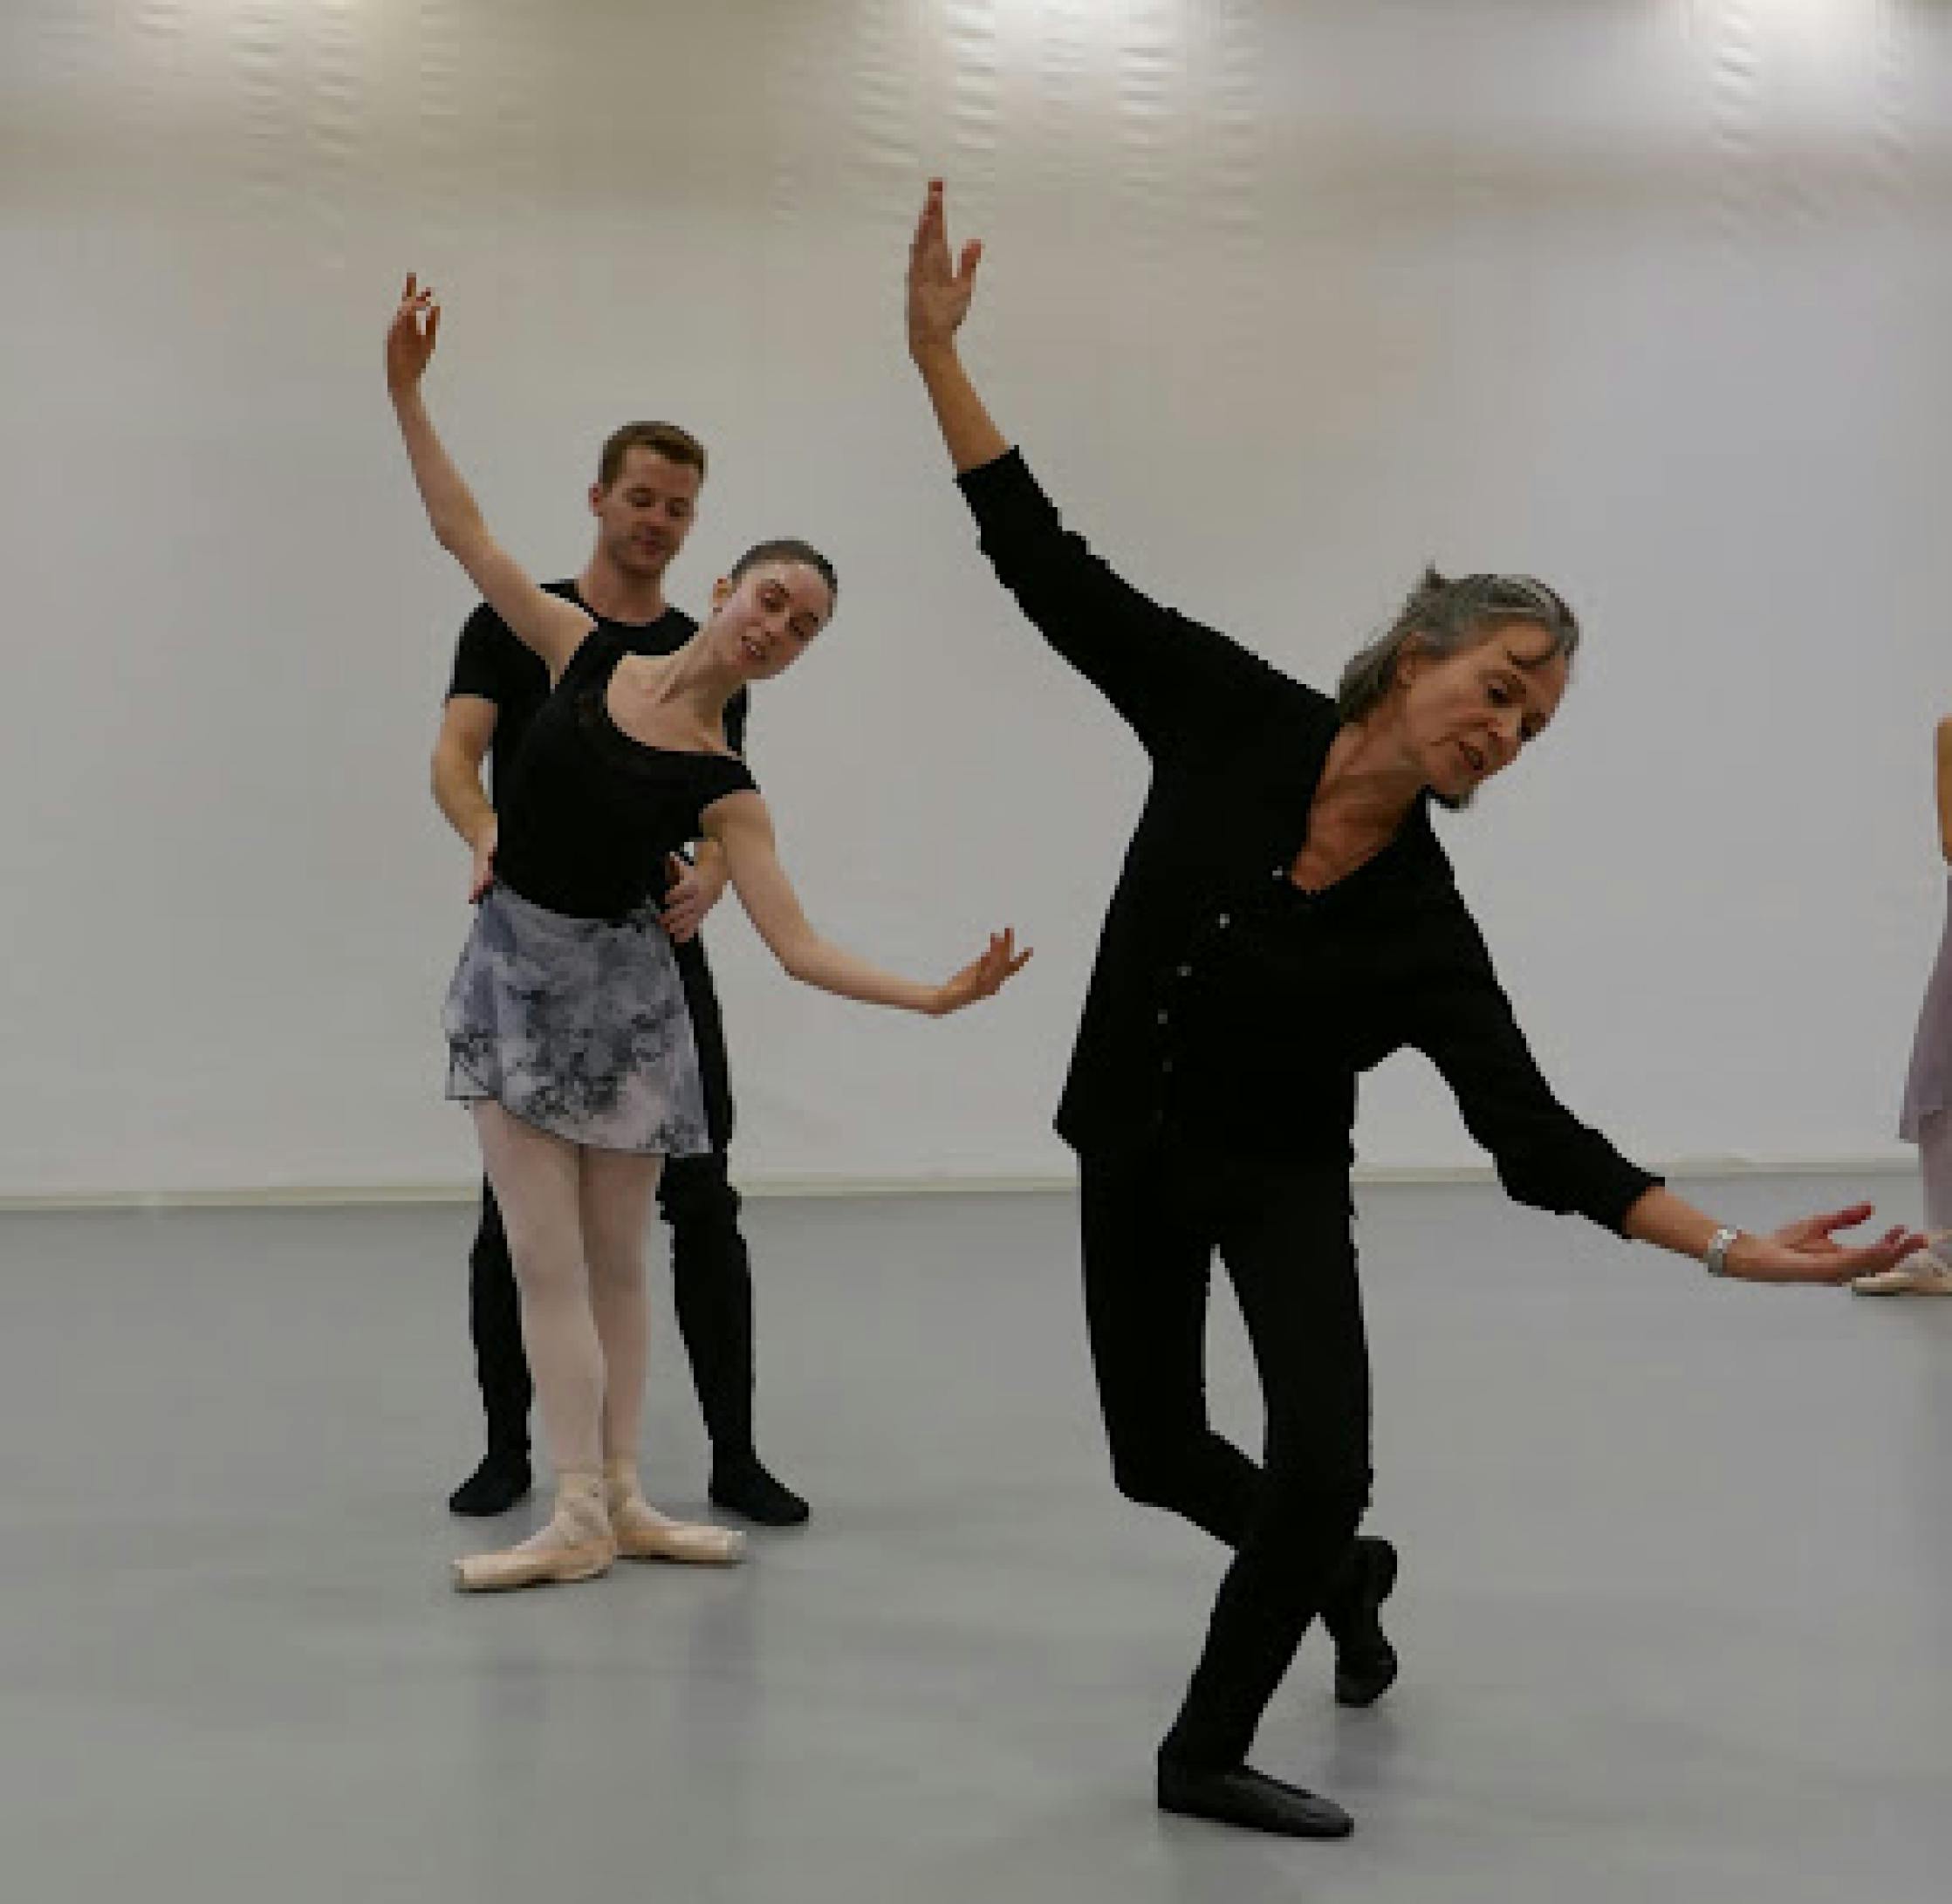 Ursula Hageli coaching the Royal Ballet’s Ginevra Zambon and Kevin Emerton in Ashton’s ballet Foyer de danse